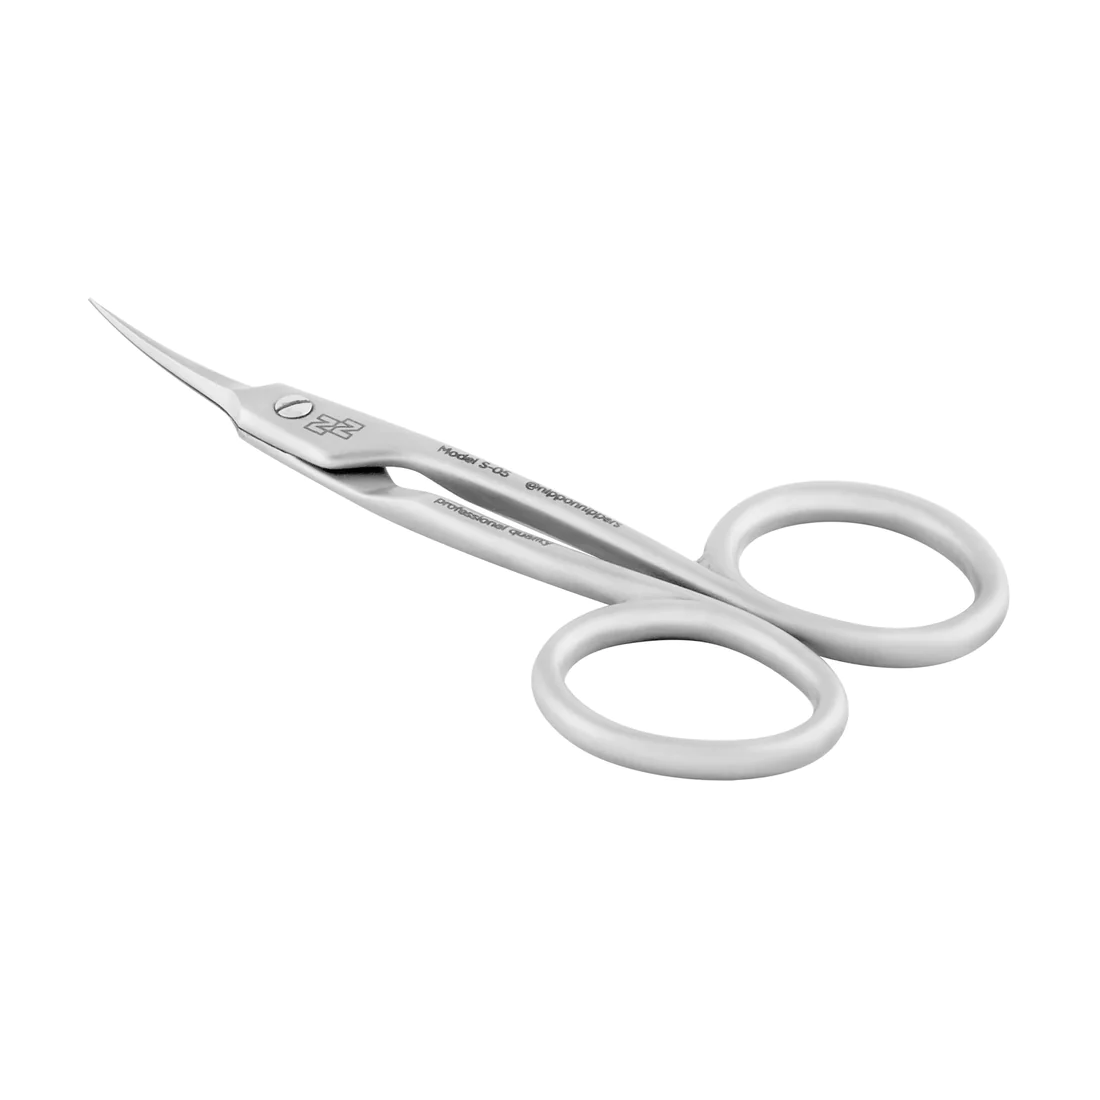 NIPPON NIPPERS Cuticle scissors S-05